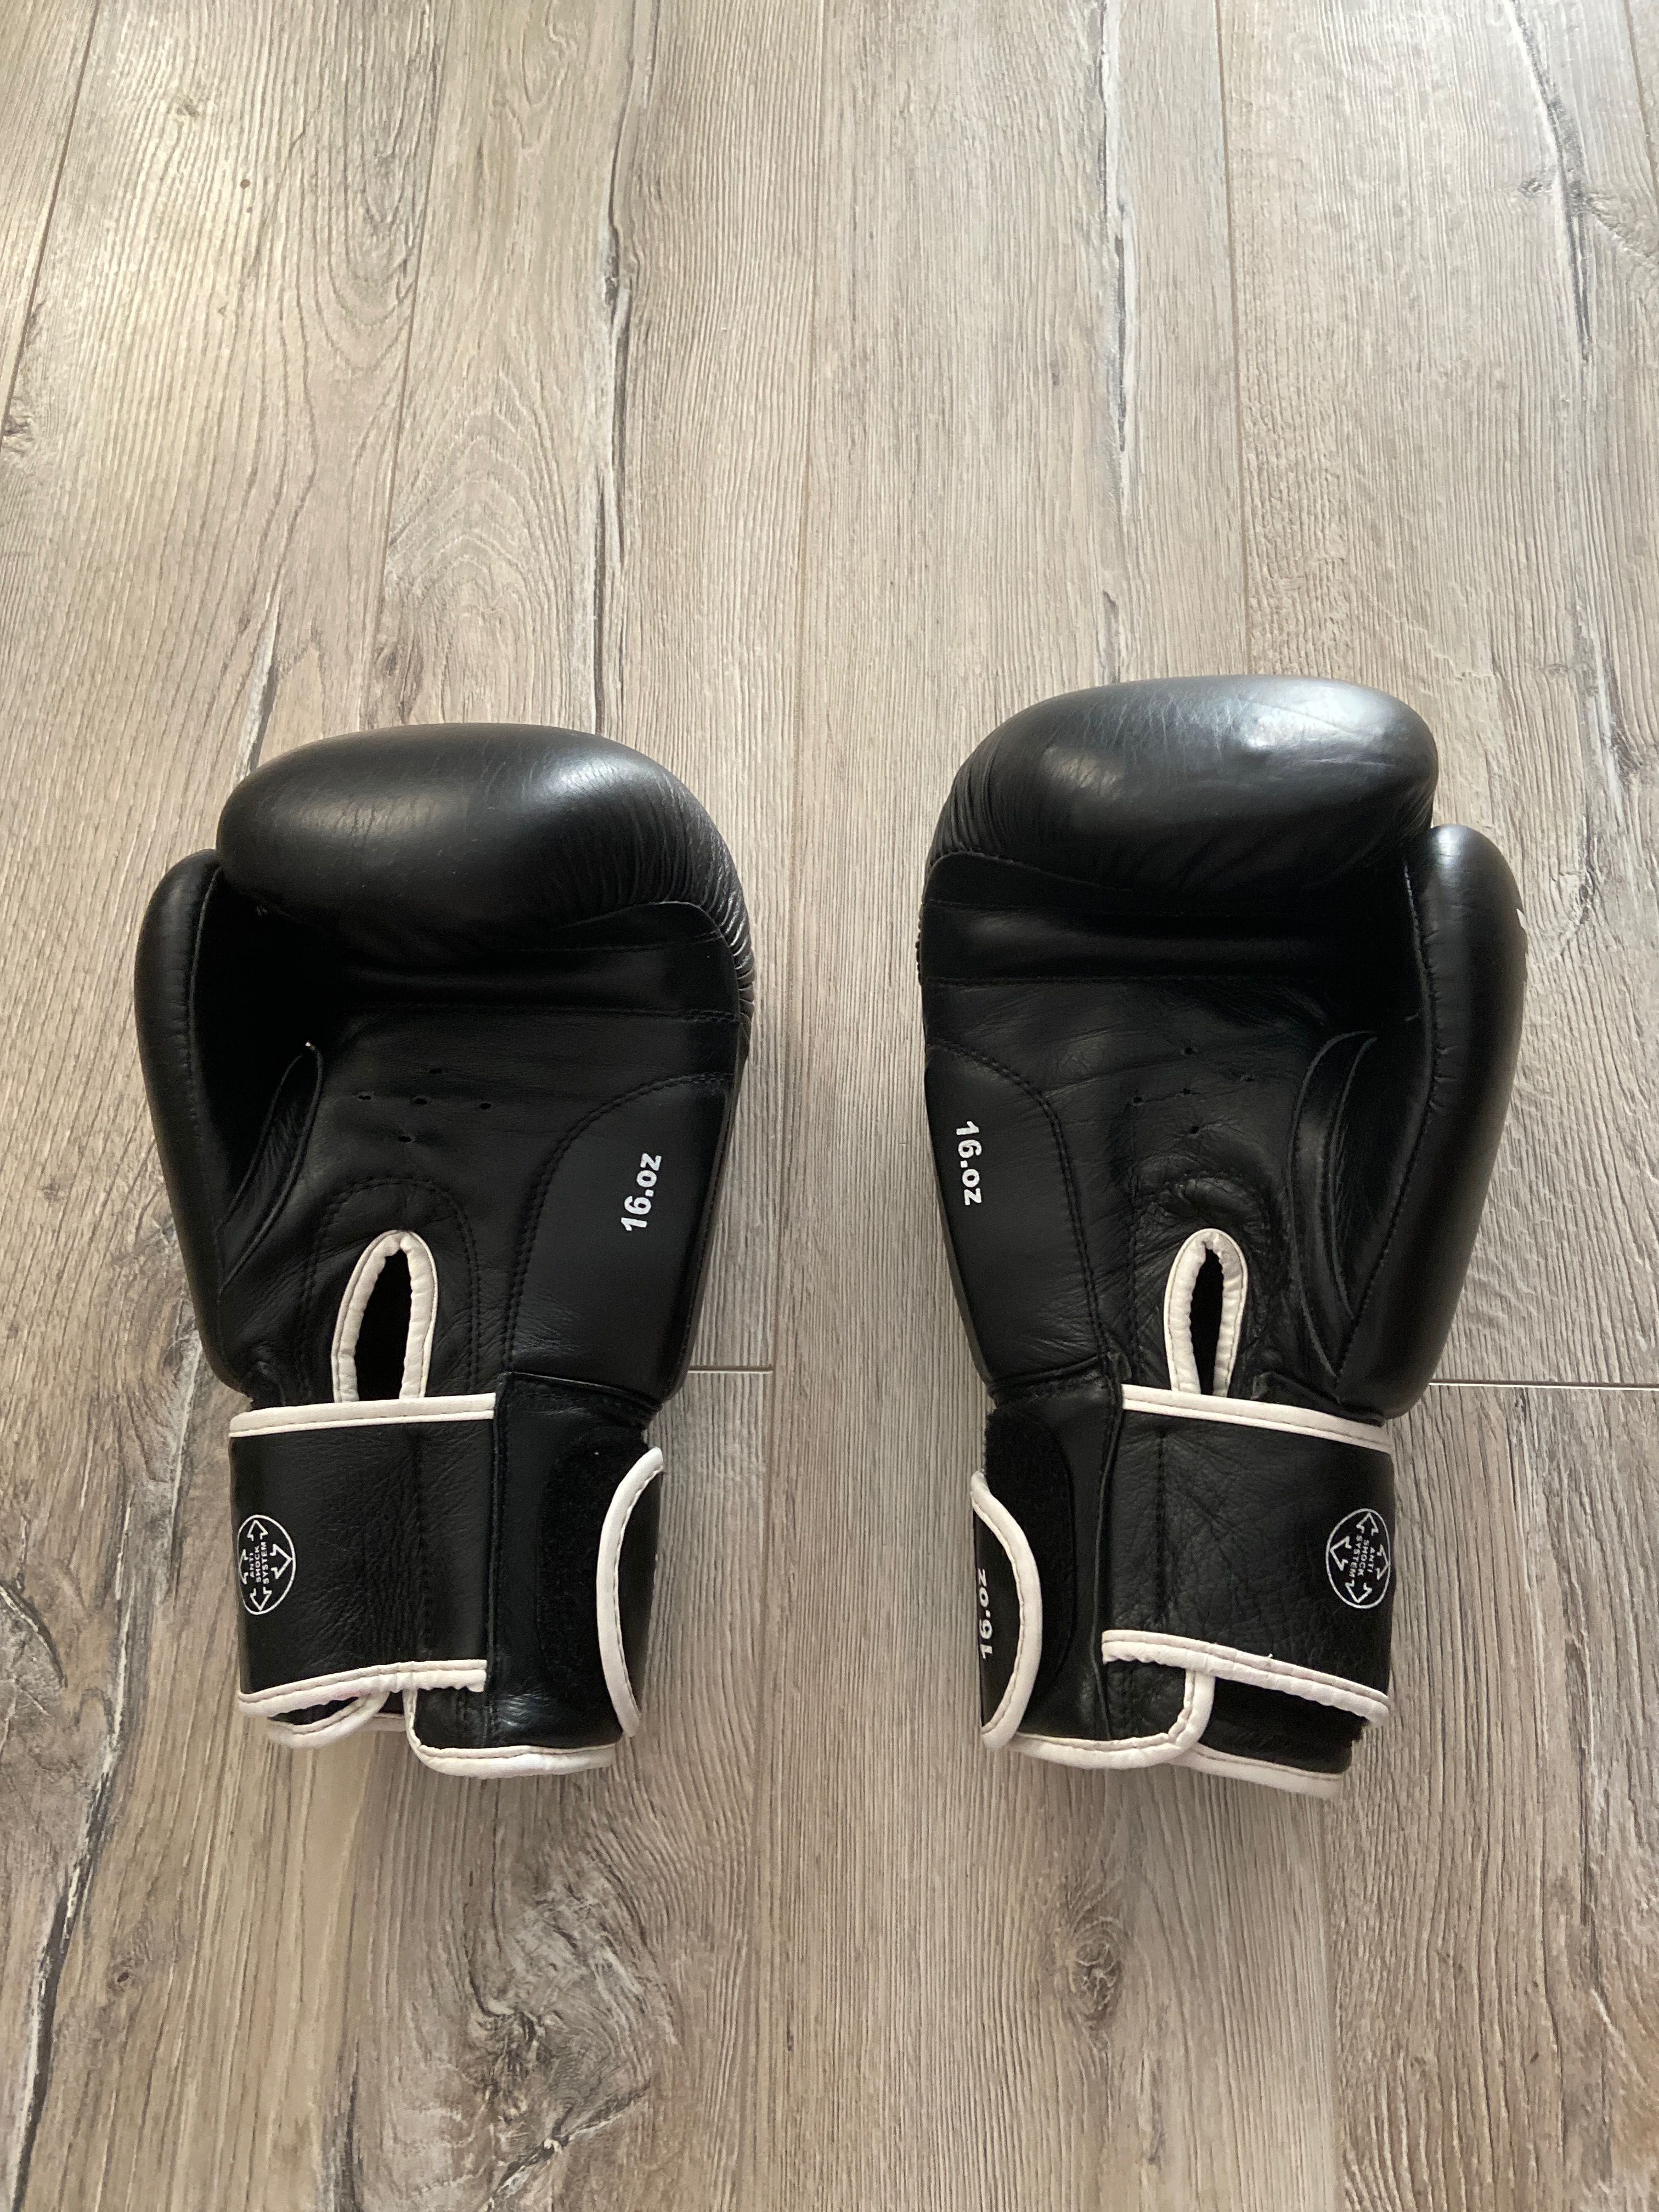 GREEN HILL, Boxing Gloves "TIGER" Color: Black, Size: 16 OZ